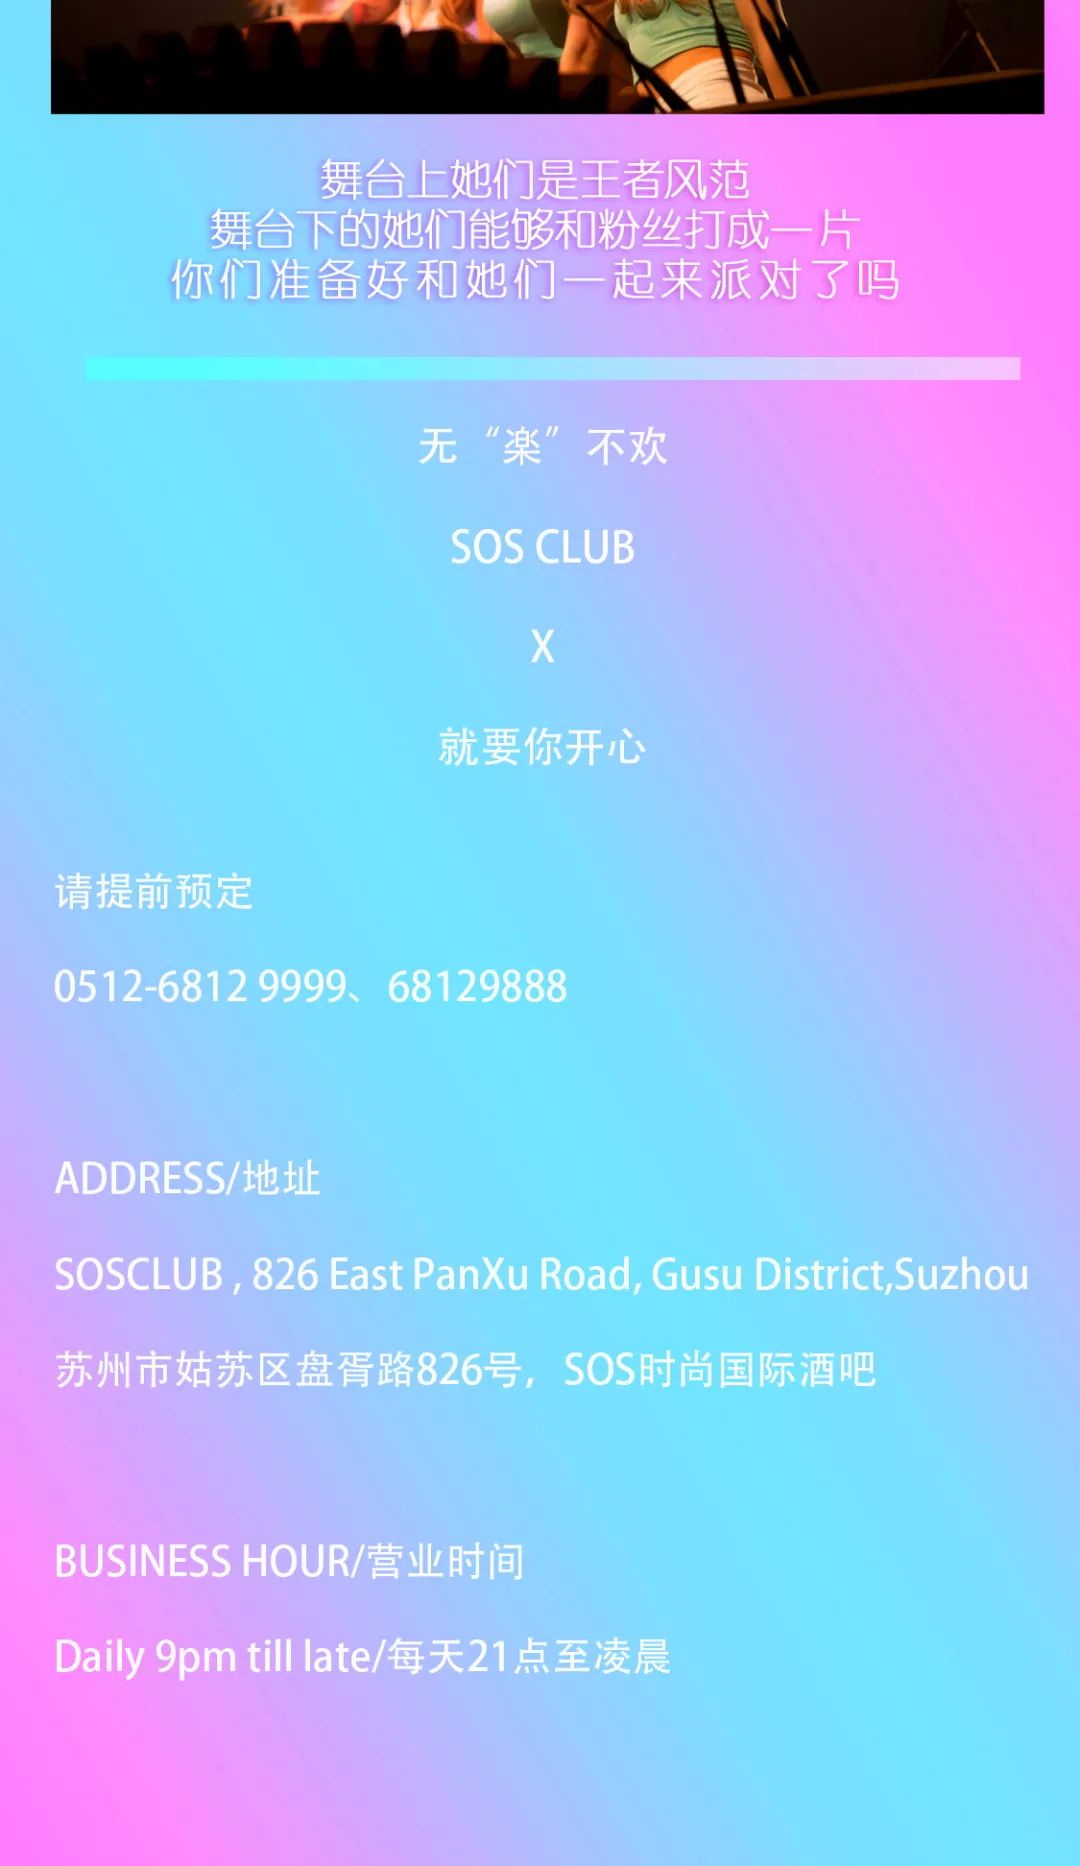 SOSCLUB | 07/30高颜值唱跳BOUCE女团“5G” 轰炸夏日狂欢夜-苏州风暴酒吧/SOS Club